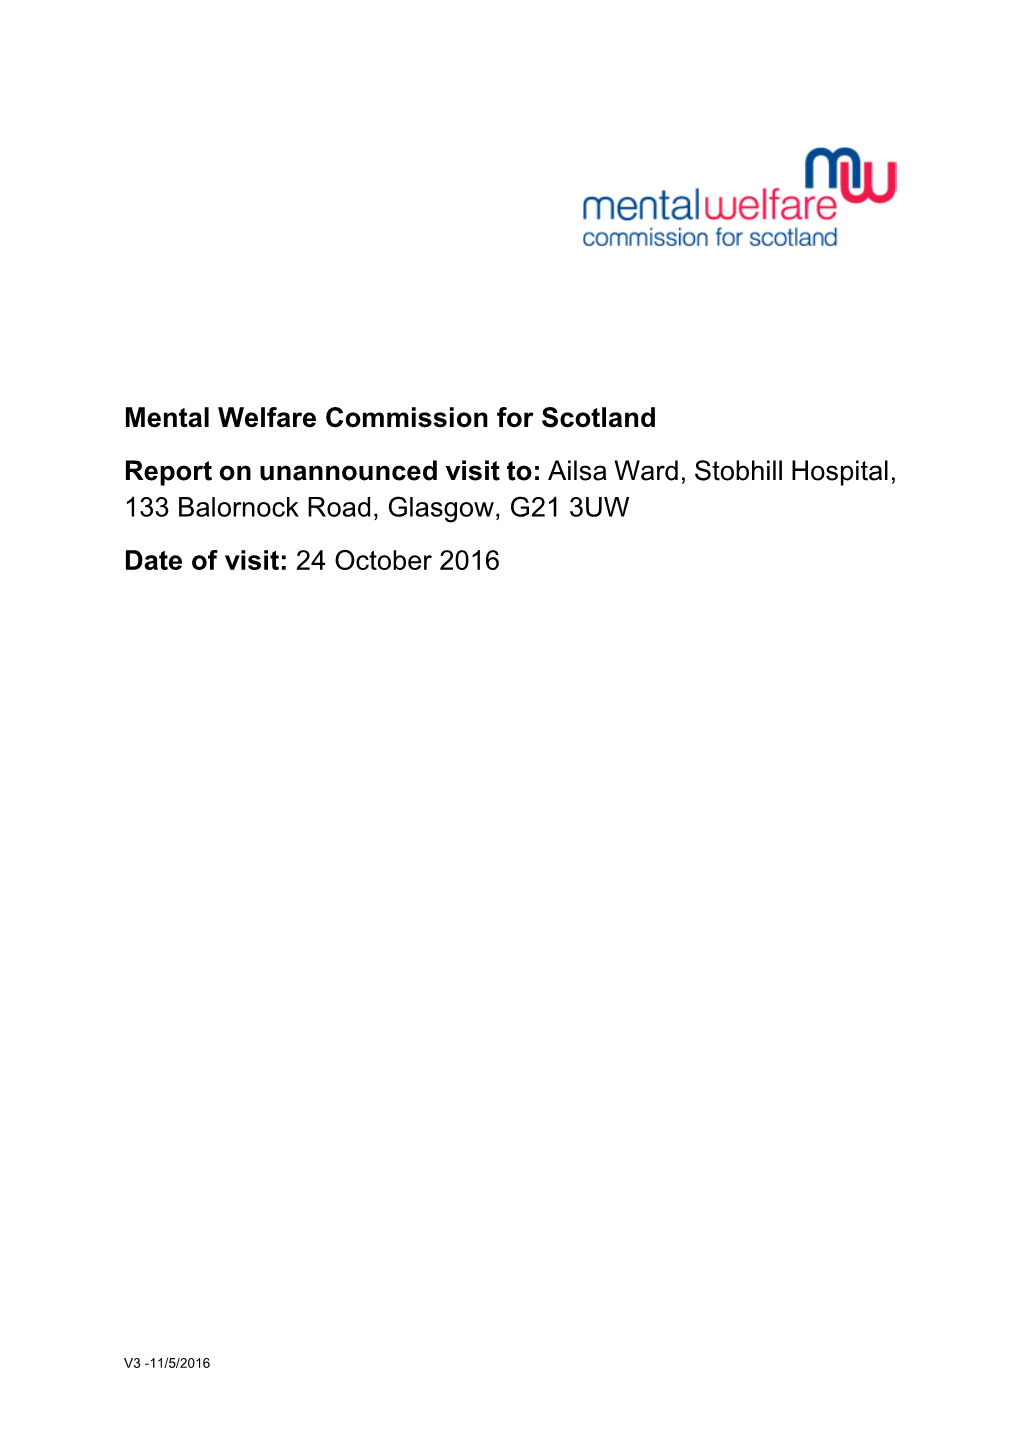 Ailsa Ward, Stobhill Hospital, 133 Balornock Road, Glasgow, G21 3UW Date of Visit: 24 October 2016